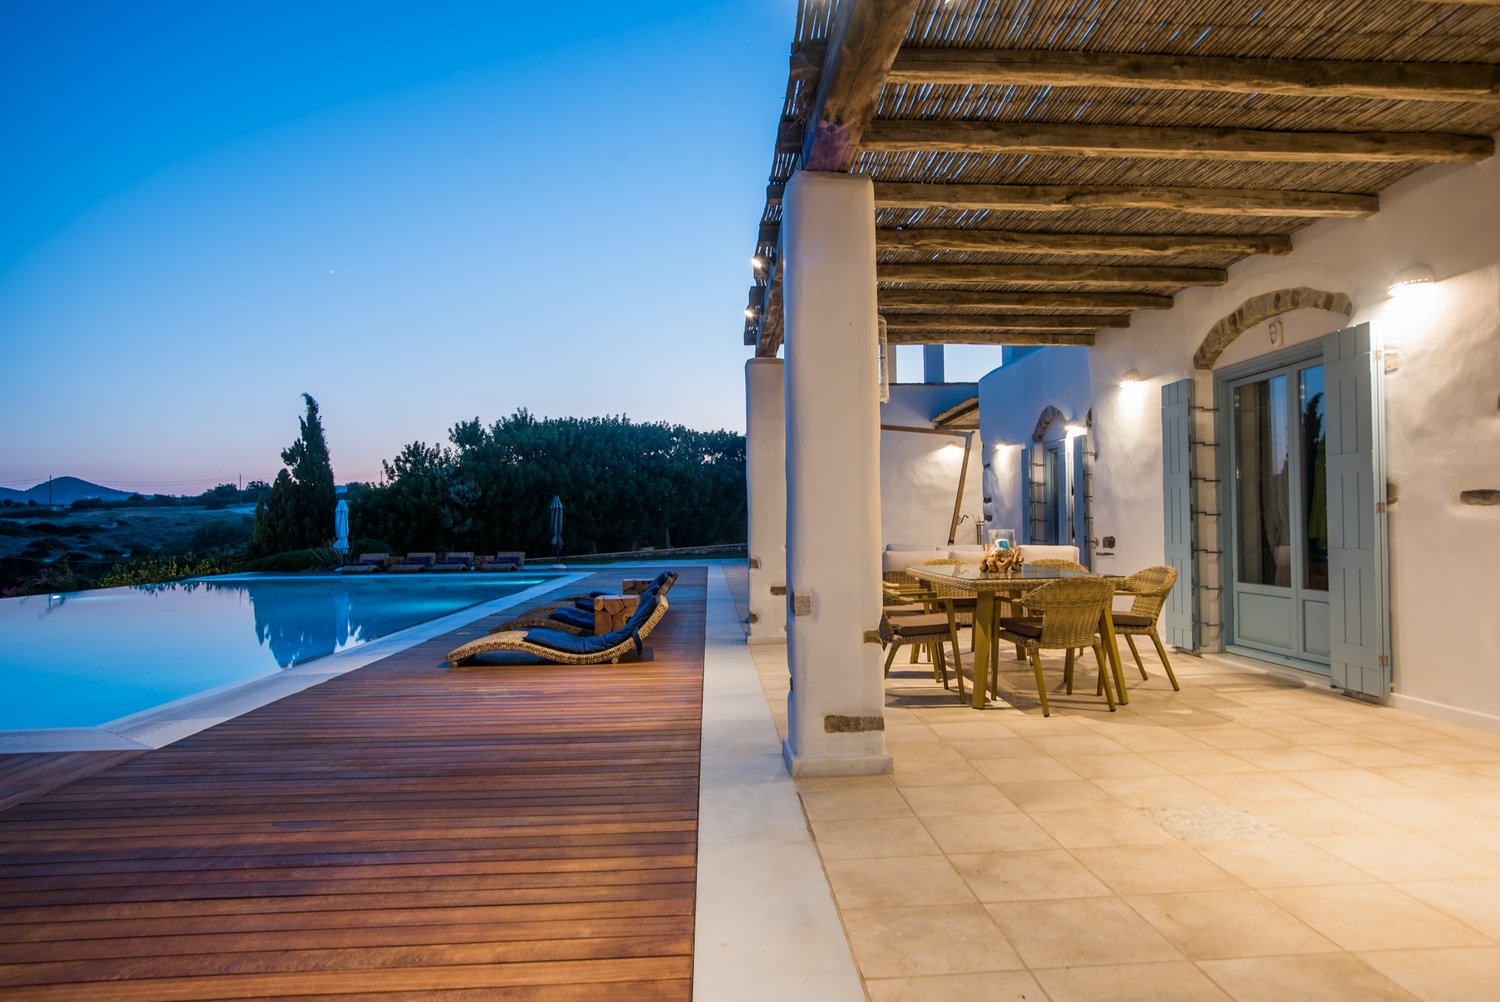 Villa apantima blue pool terrace